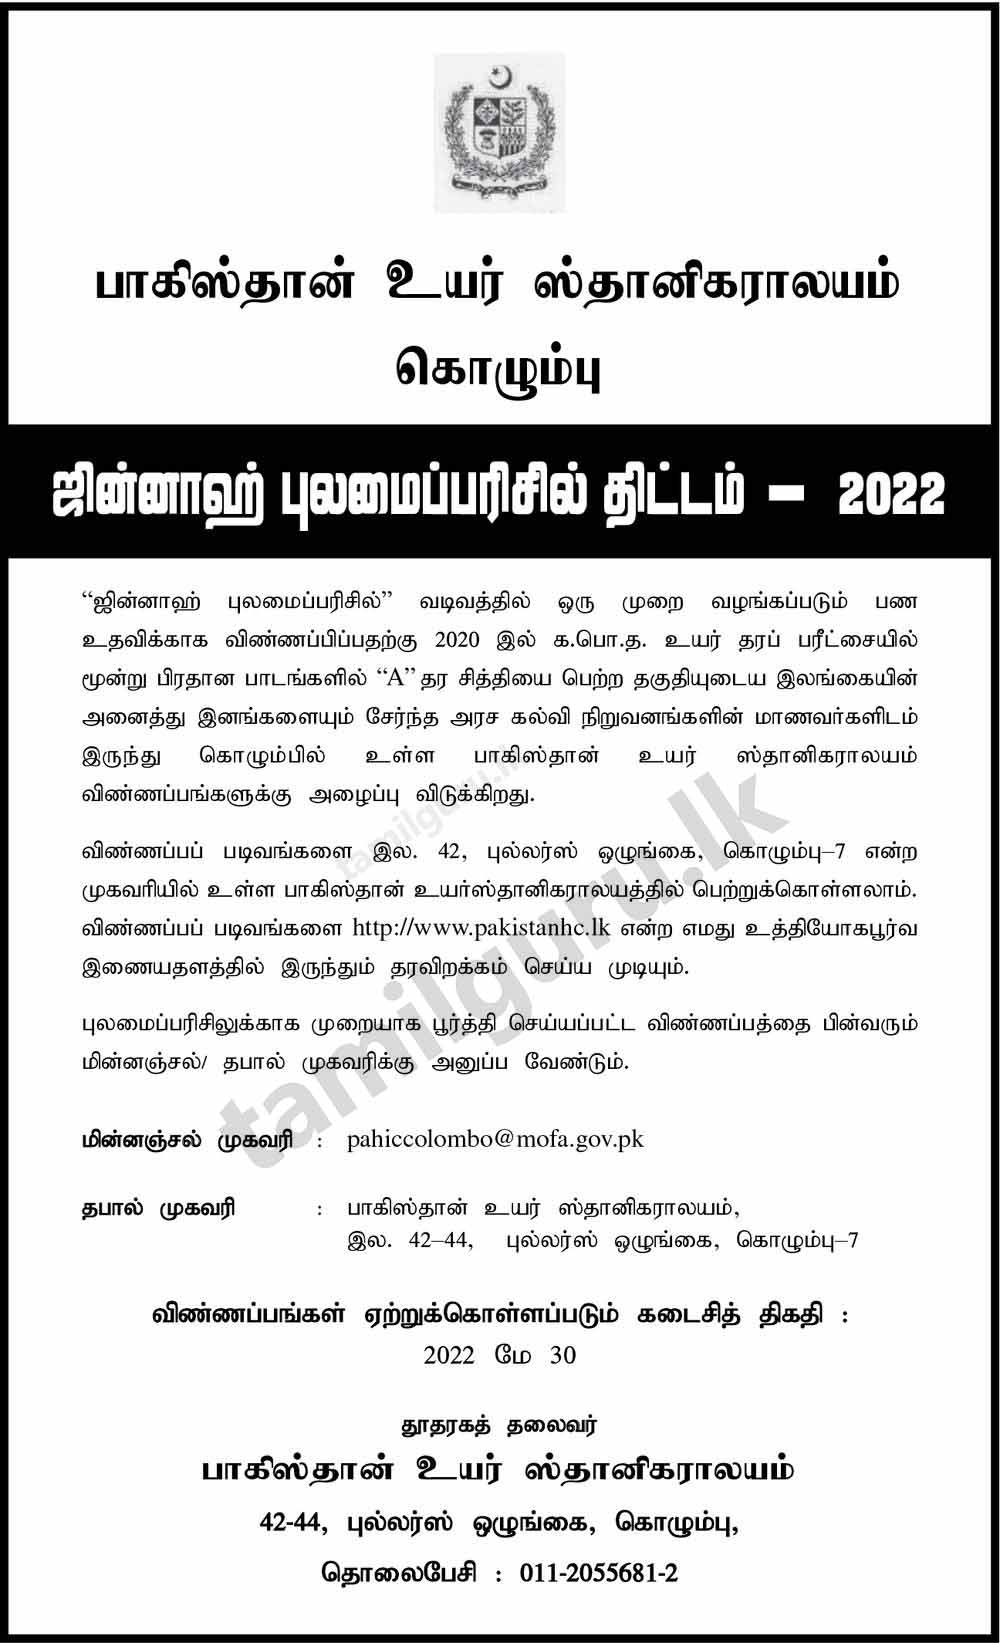 Award of Jinnah Scholarships 2022 for Sri Lankan Students (Details in Tamil)